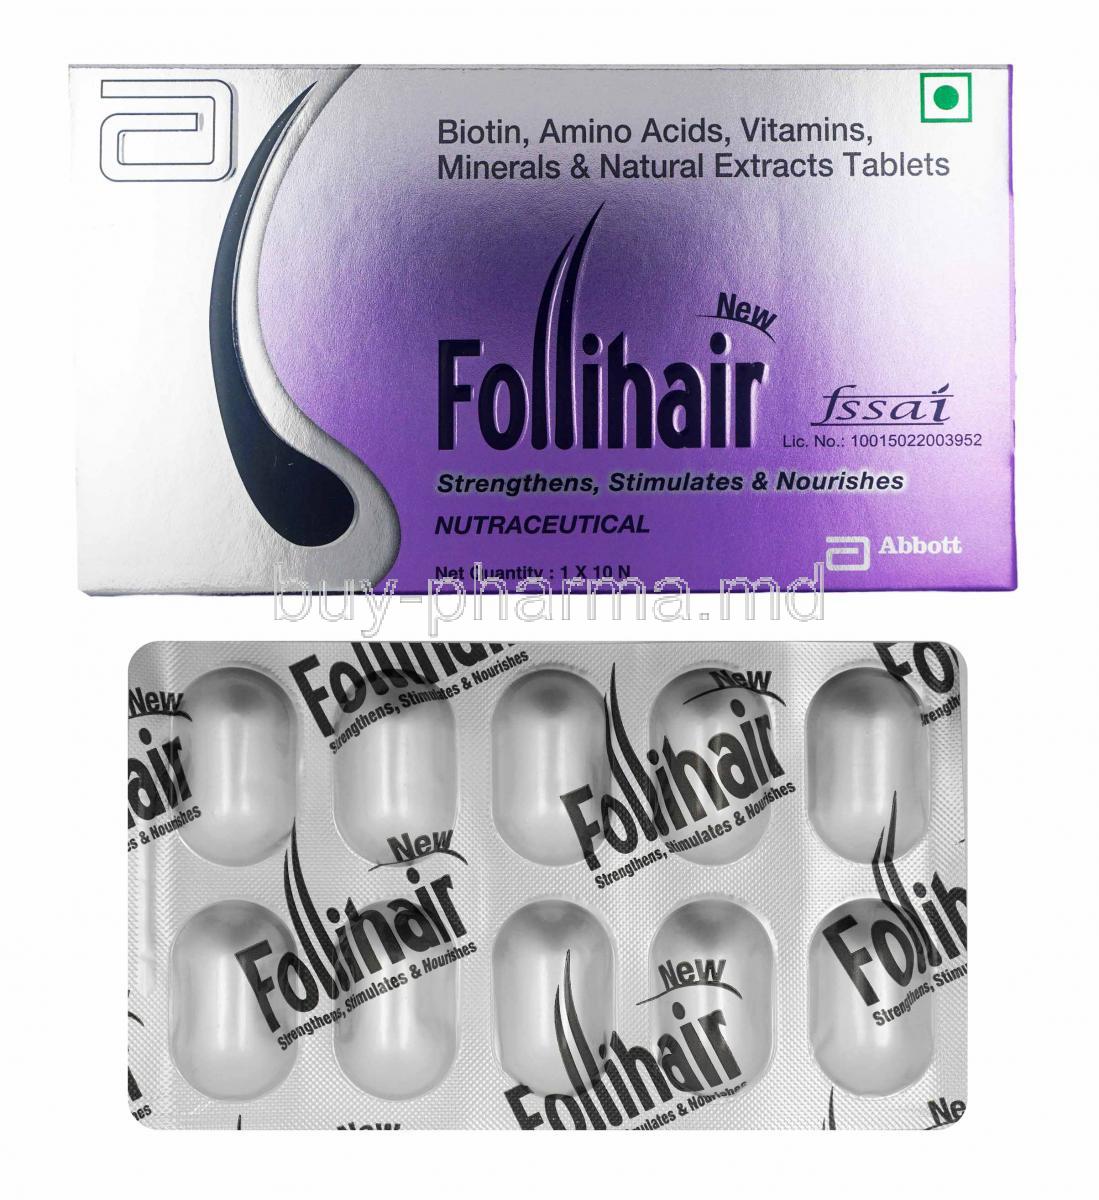 New Follihair box and tablets